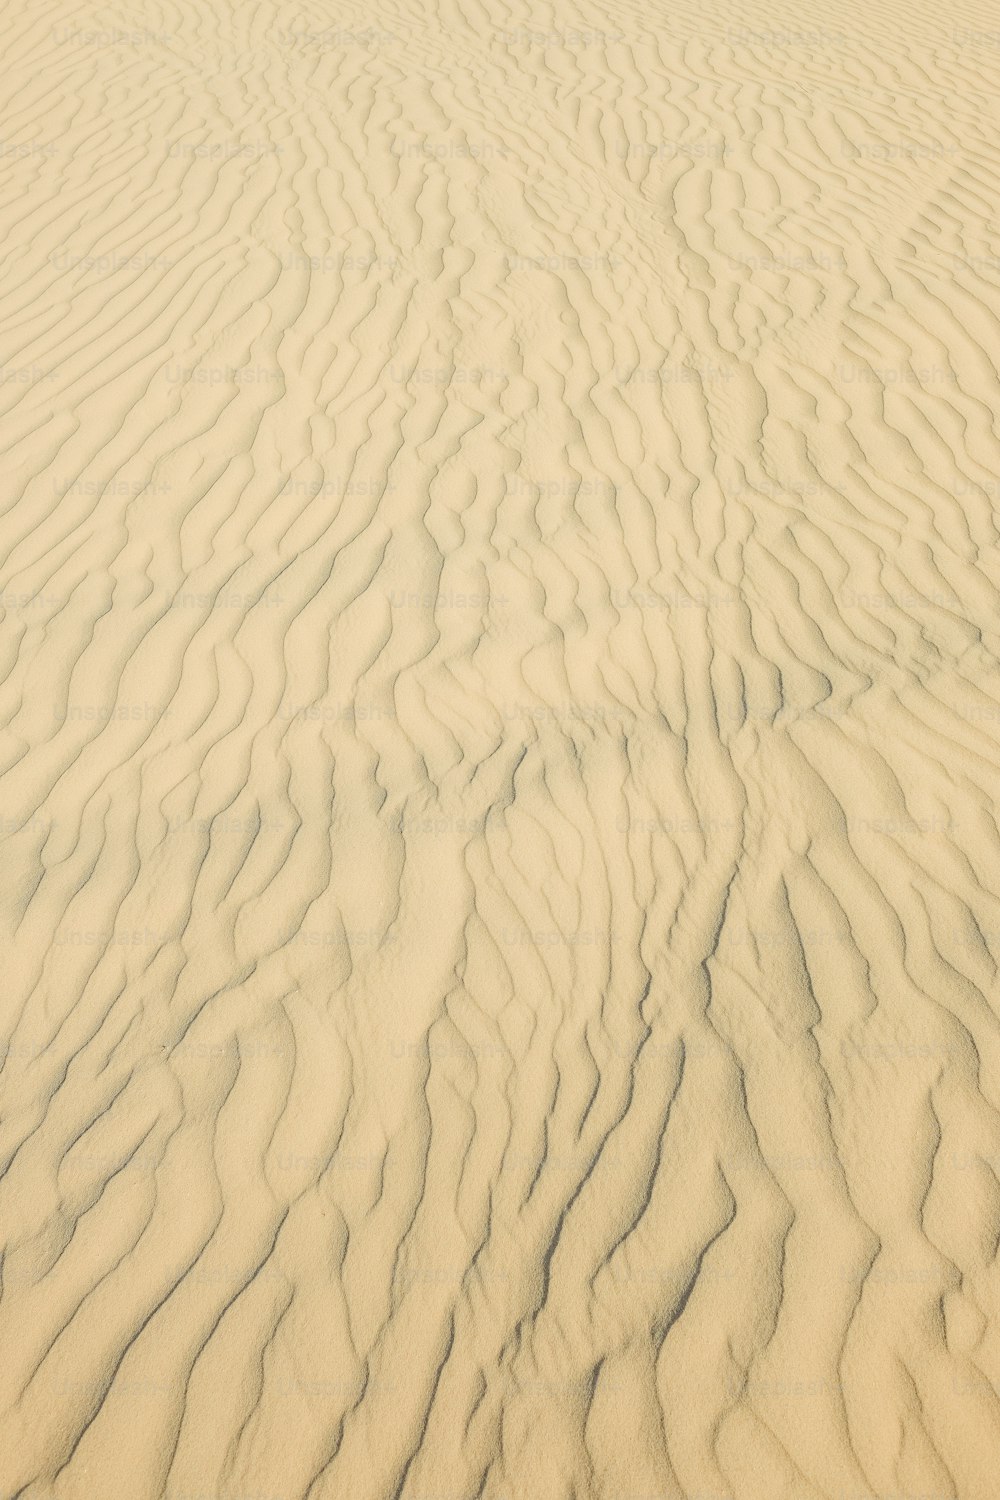 Nahaufnahme einer Sanddüne